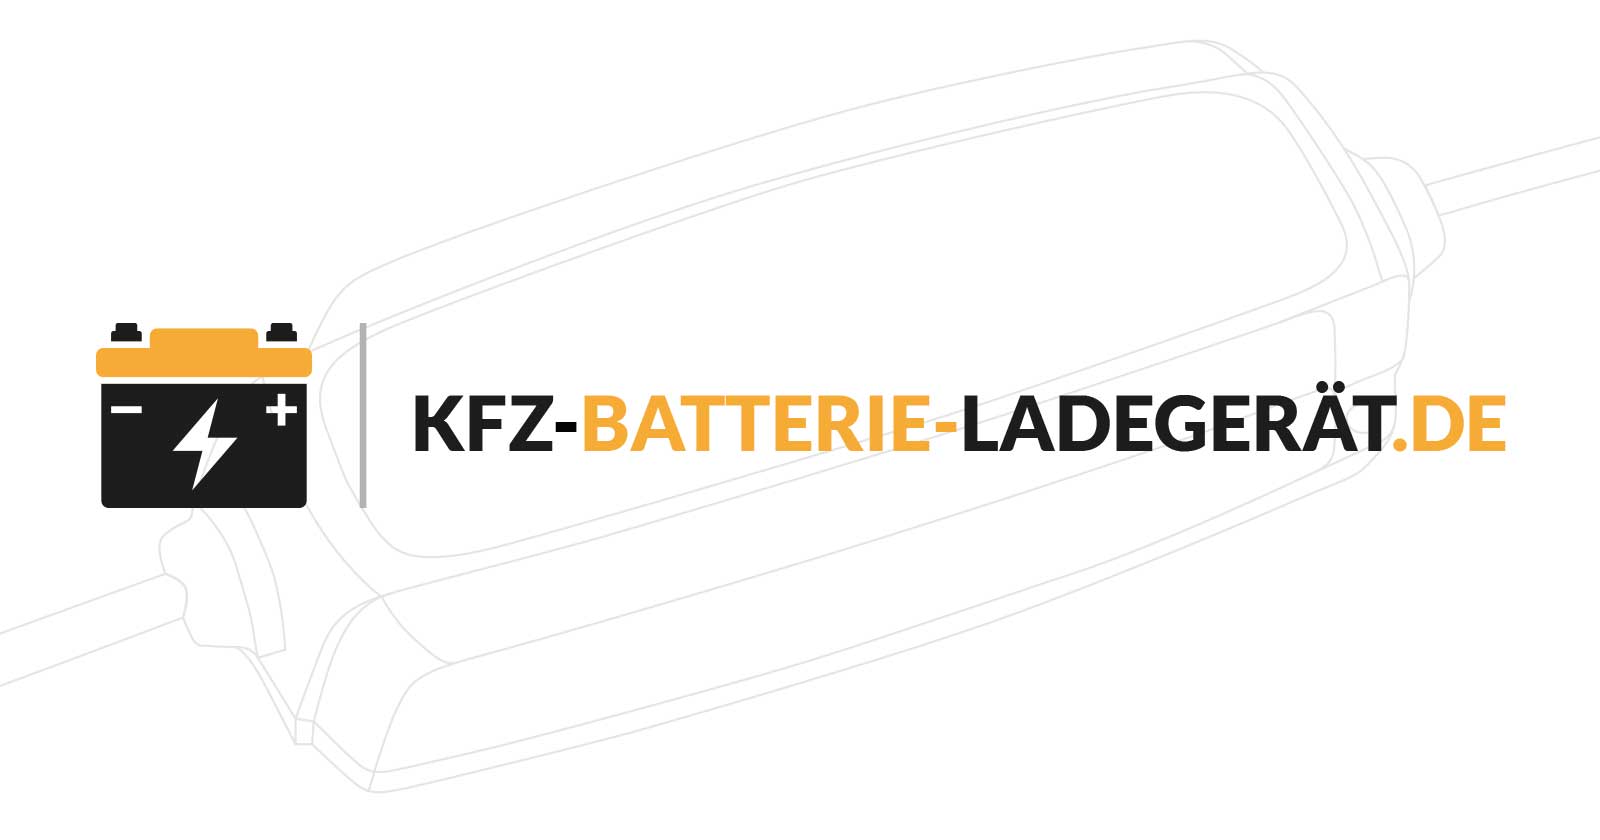 (c) Kfz-batterie-ladegeraet.de